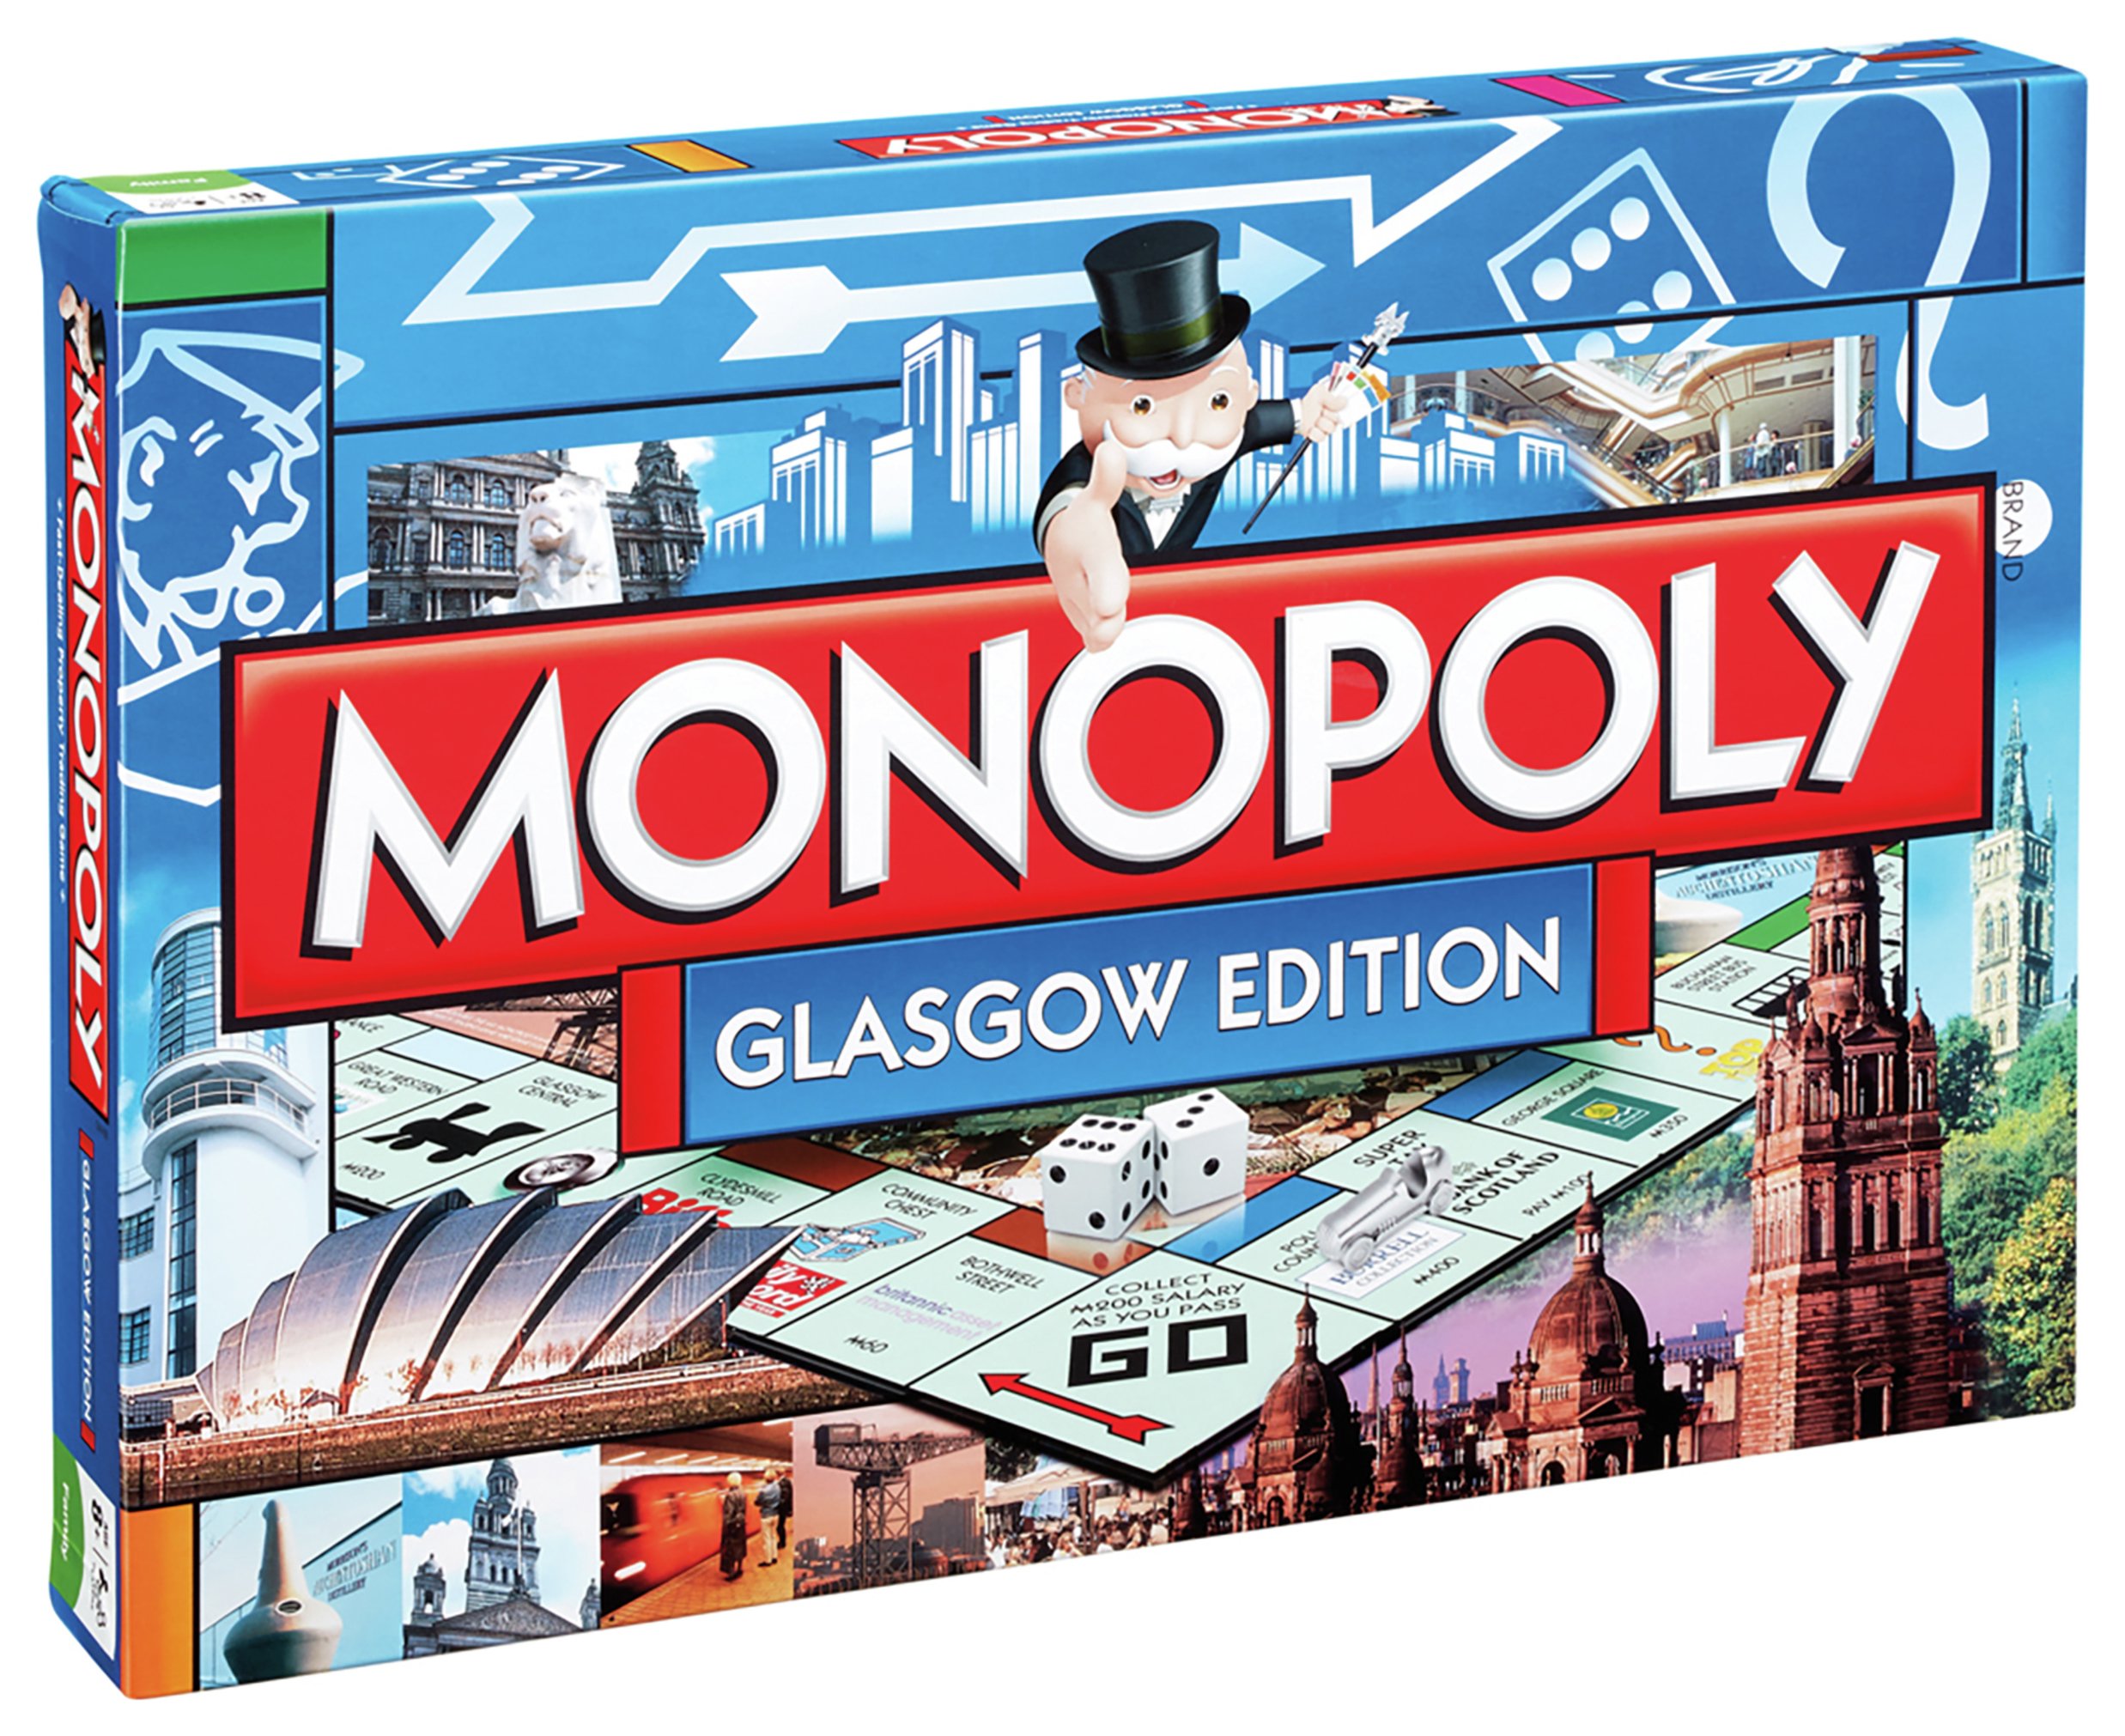 Glasgow Monopoly Board Game. Review thumbnail